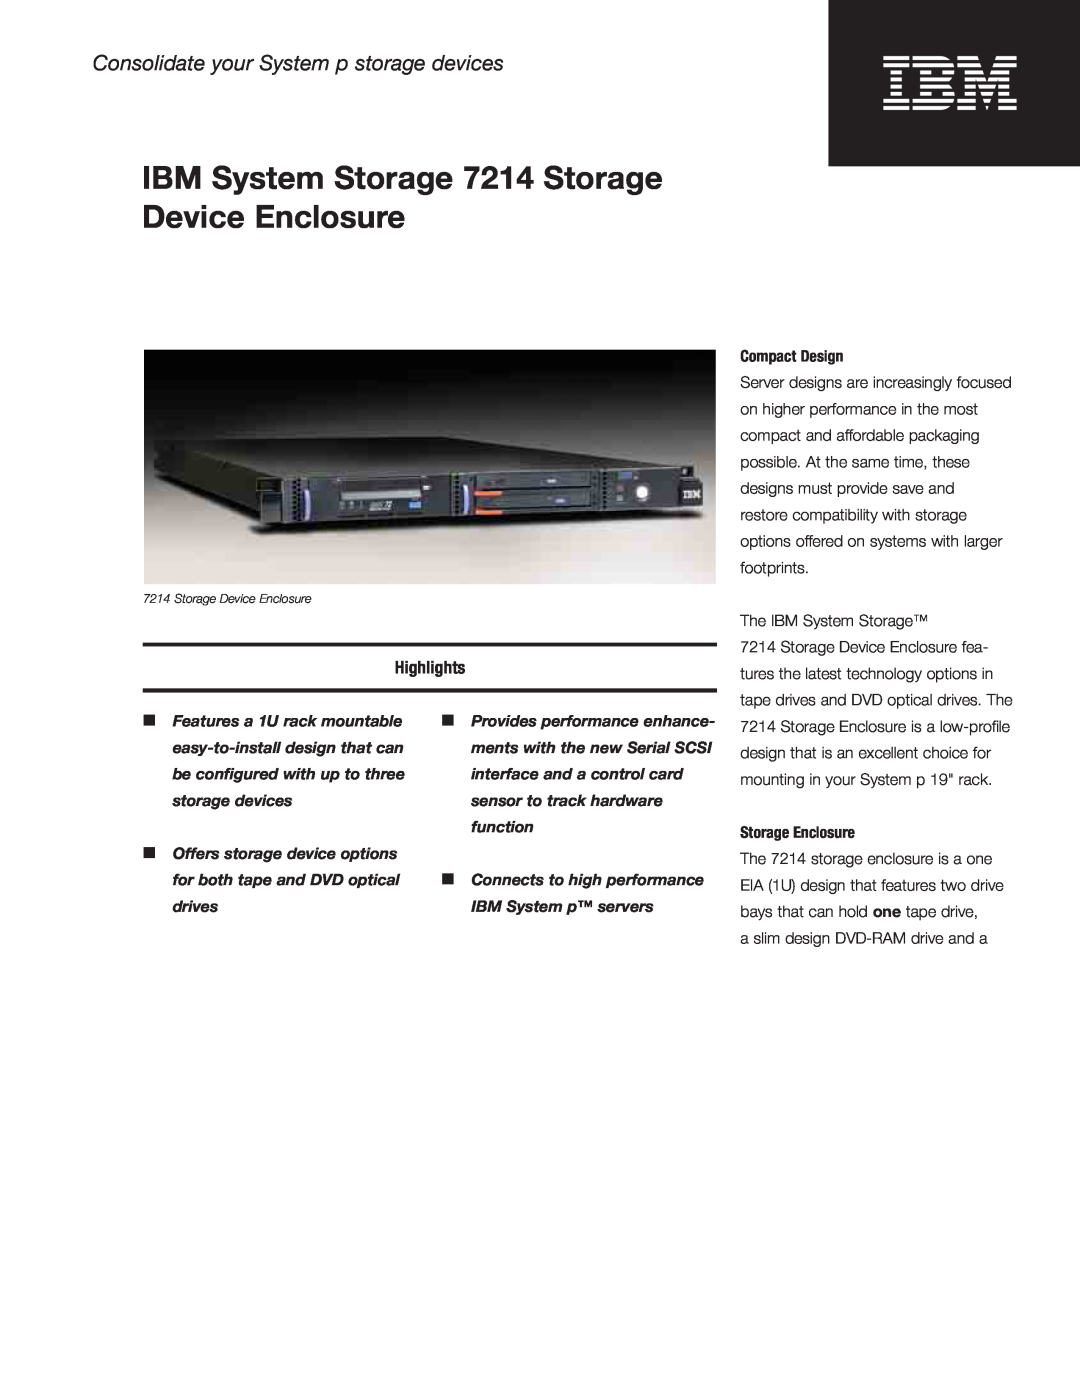 IBM 7214 manual Highlights, Compact Design, The IBM System Storage, Storage Enclosure, a slim design DVD-RAM drive and a 